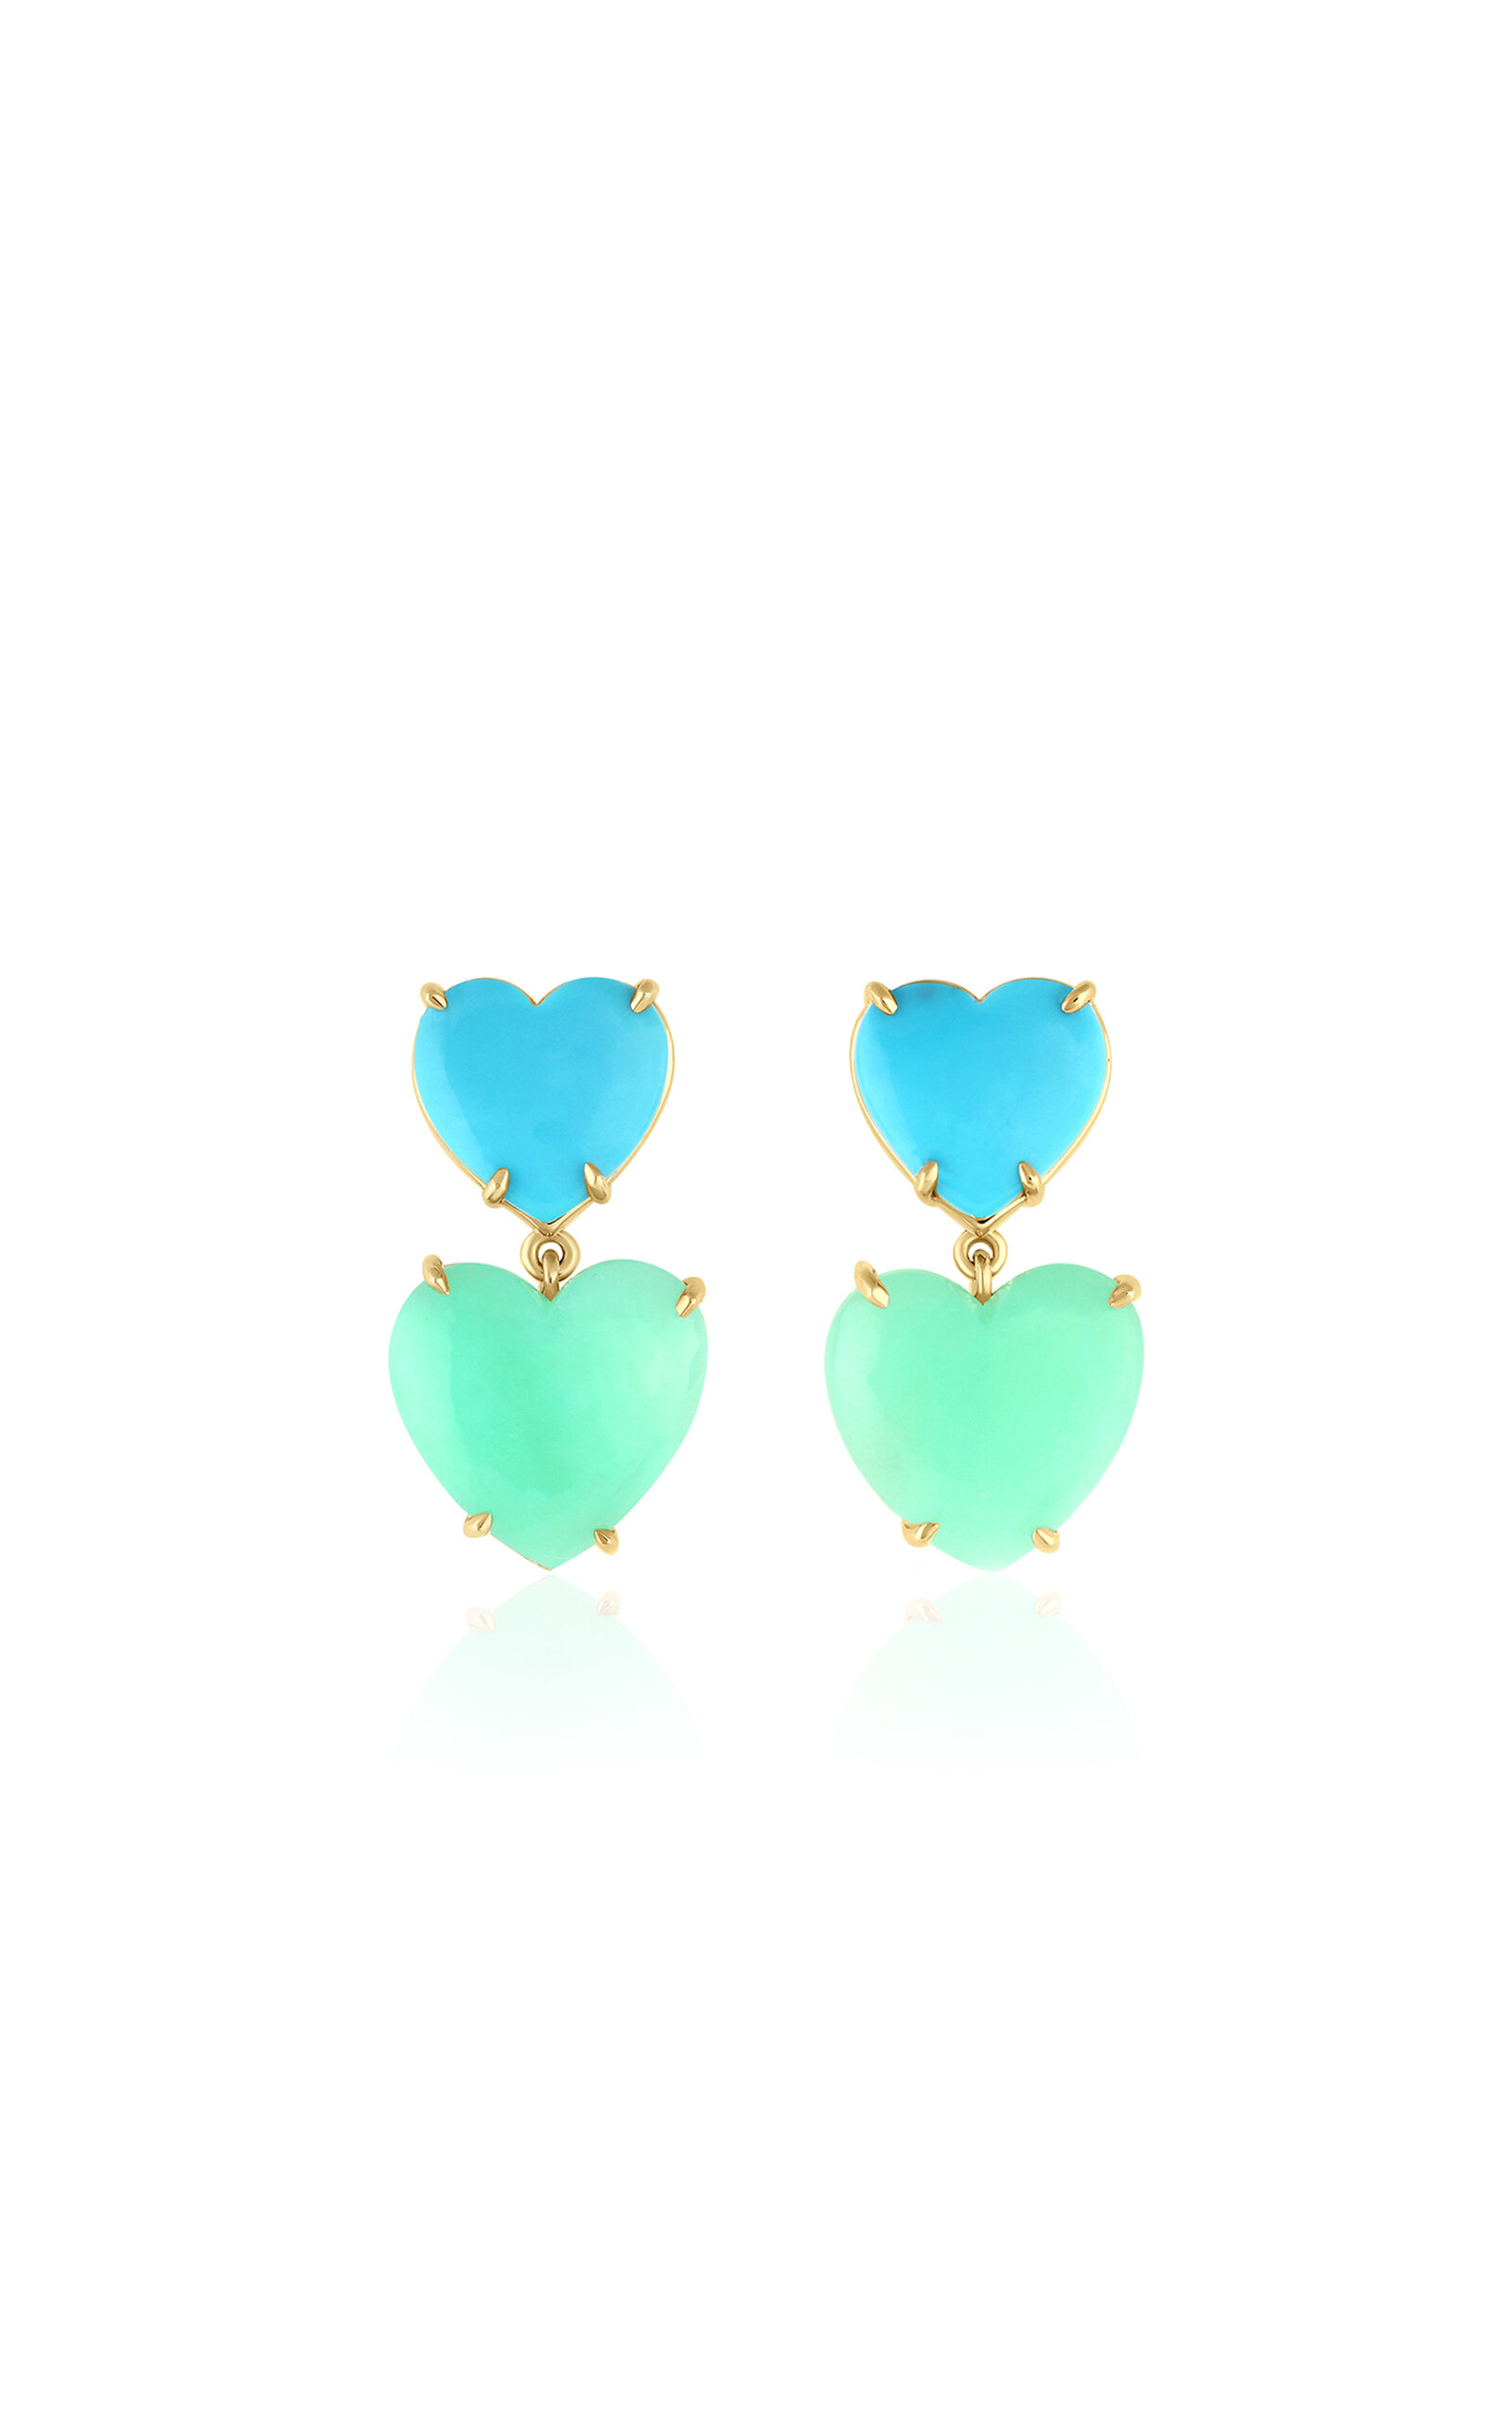 M.spalten Women's The Large Double Heart 14k Yellow Gold Turquoise; Chrysoprase Earrings In Blue